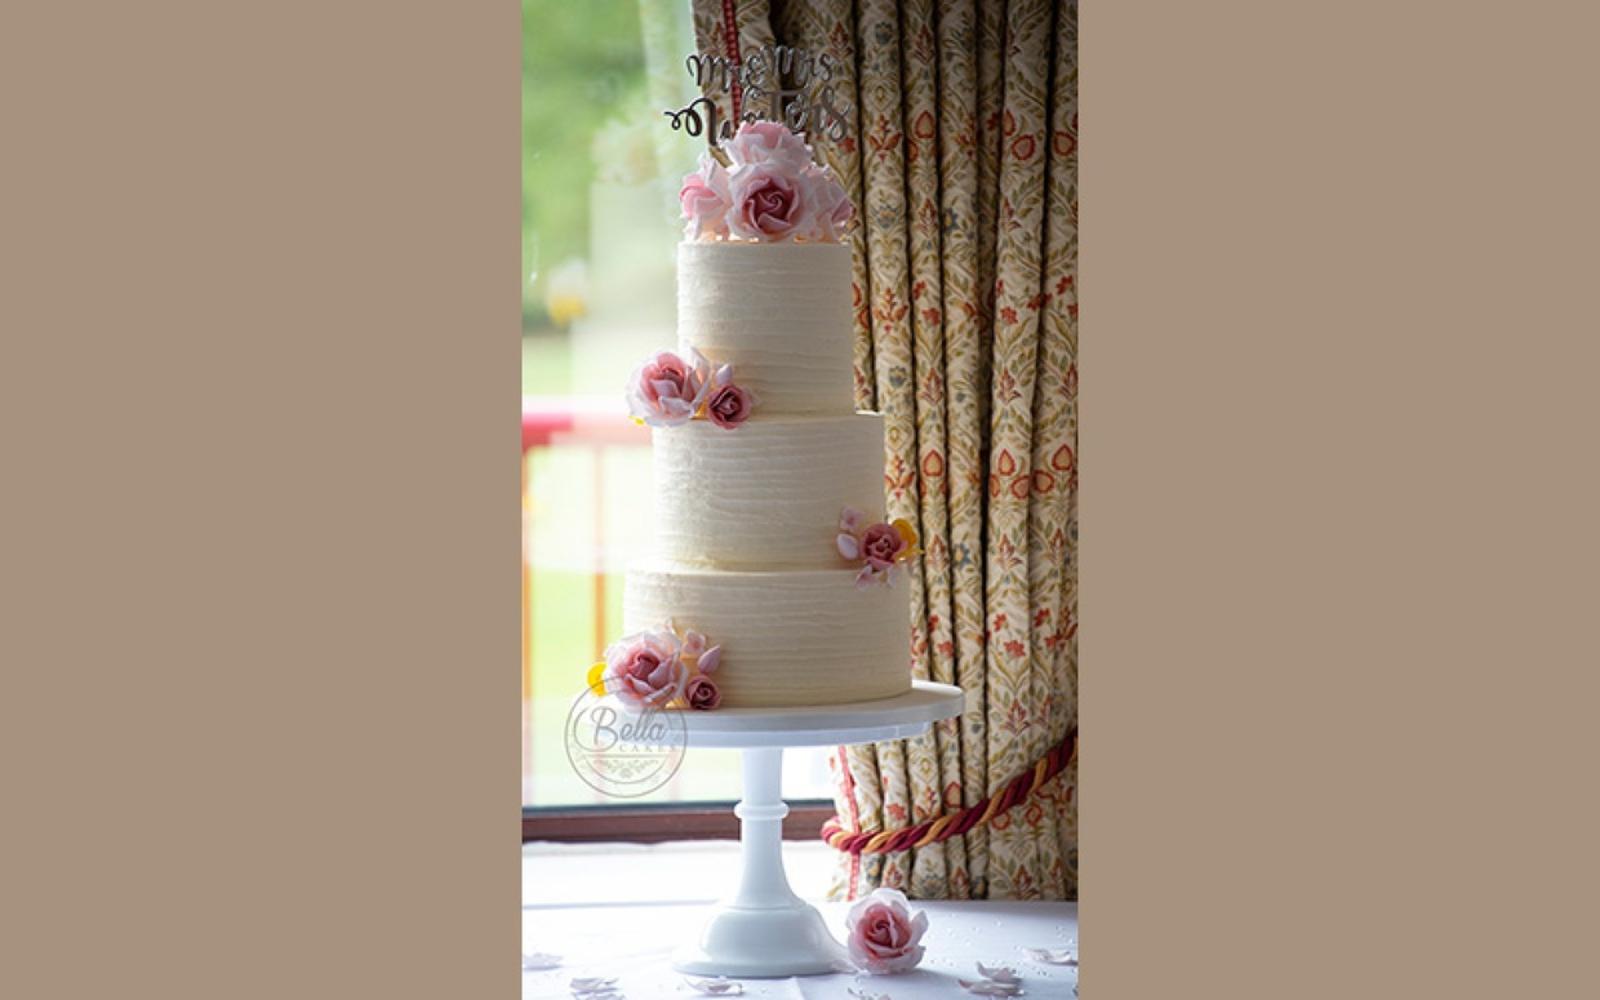 Real Wedding Whitewed Directory approved cake designer Bella Cakes Sharon Wrag Barn Highworth three tier pink rose buttercream